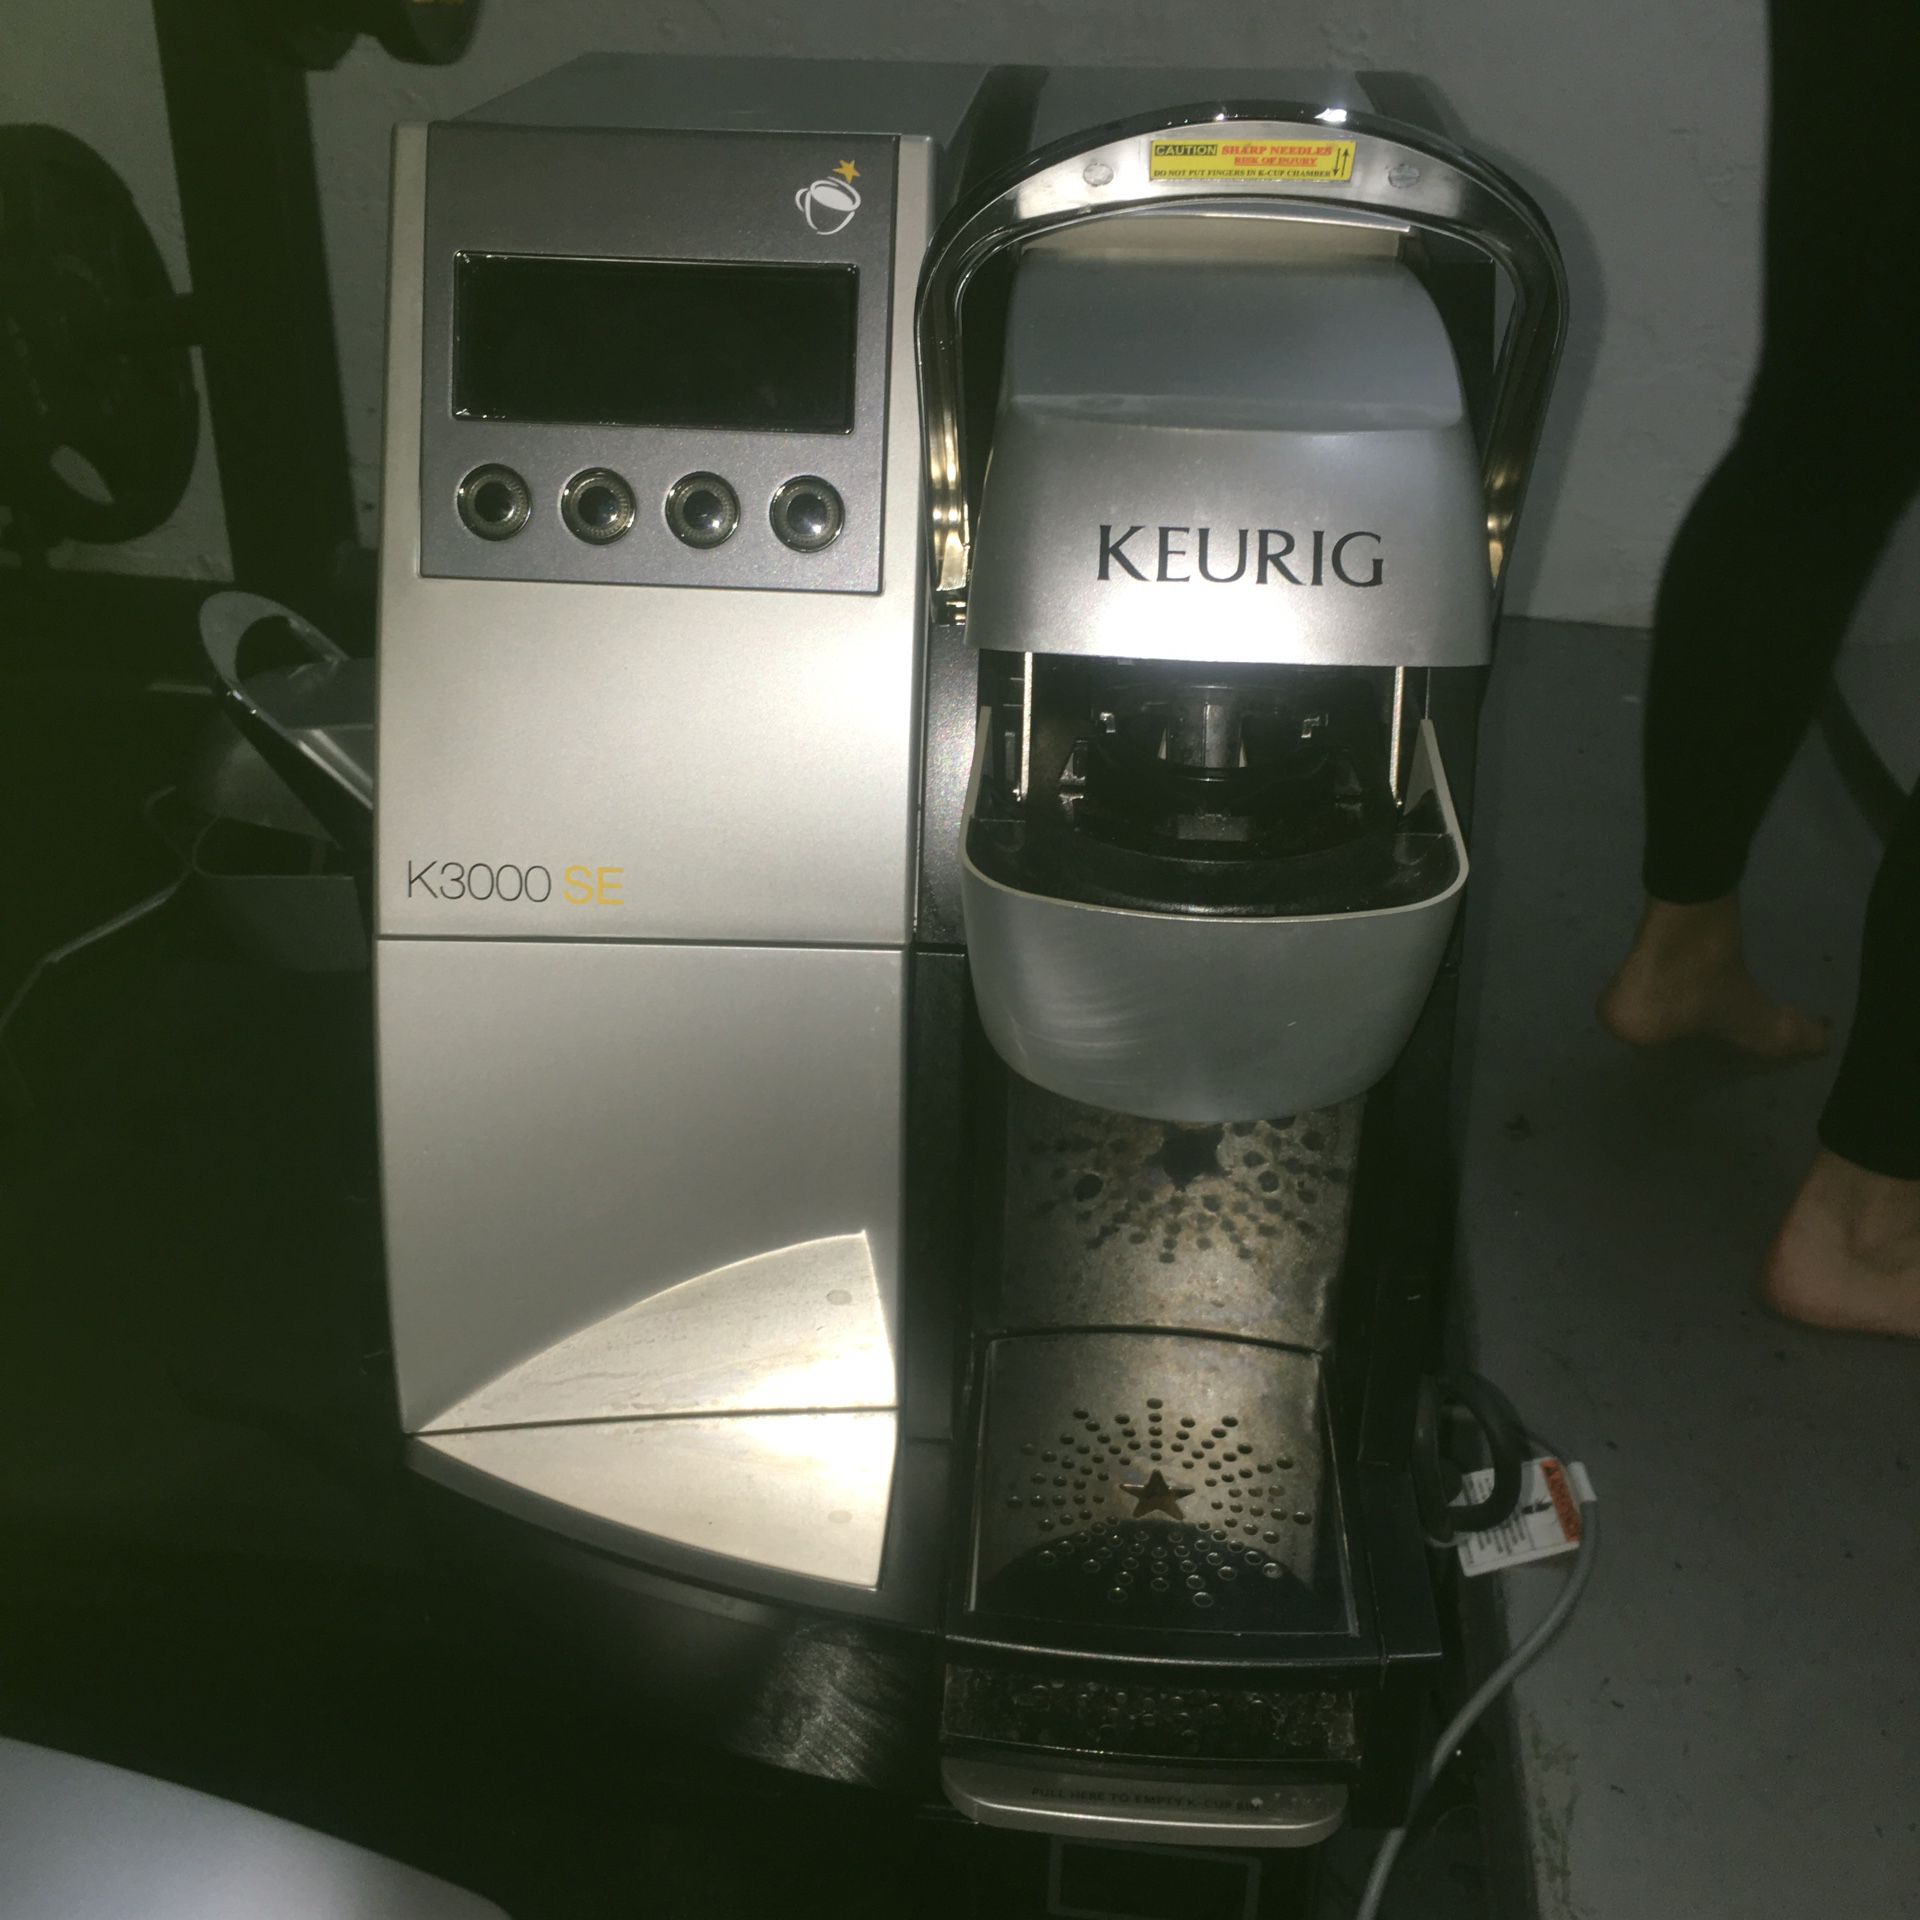 Keurig s3000 se Commercial grade coffee maker